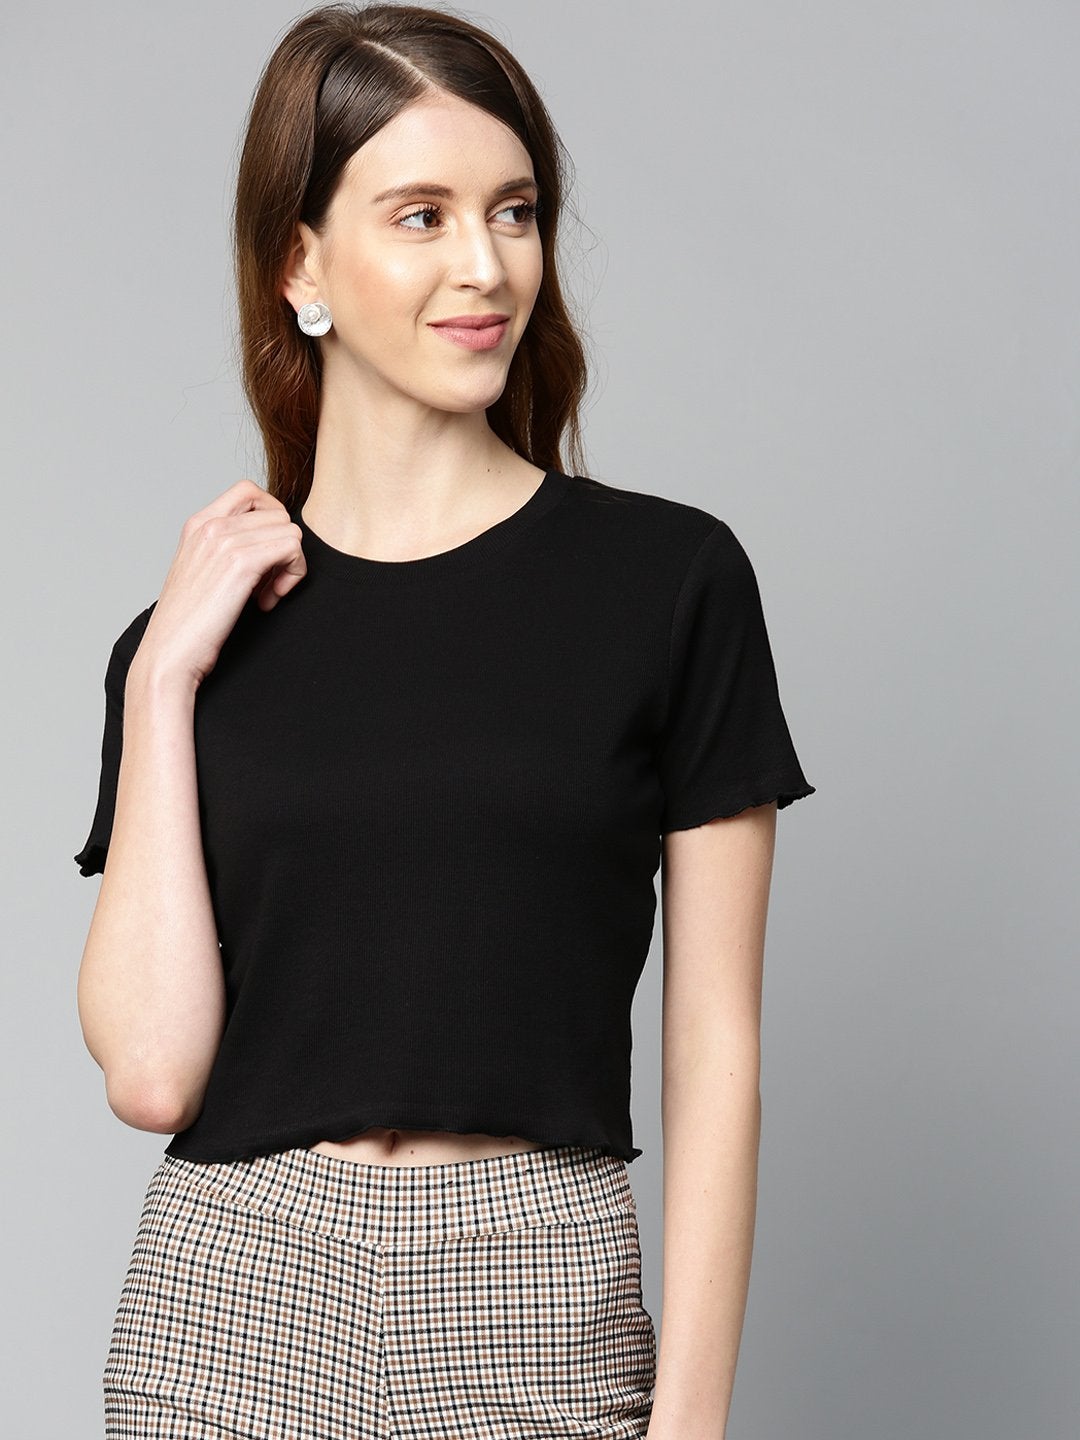 Black Colorblock Contrast Collar Polka Dot Short Sleeve Blouse Top Sz S M L  XL